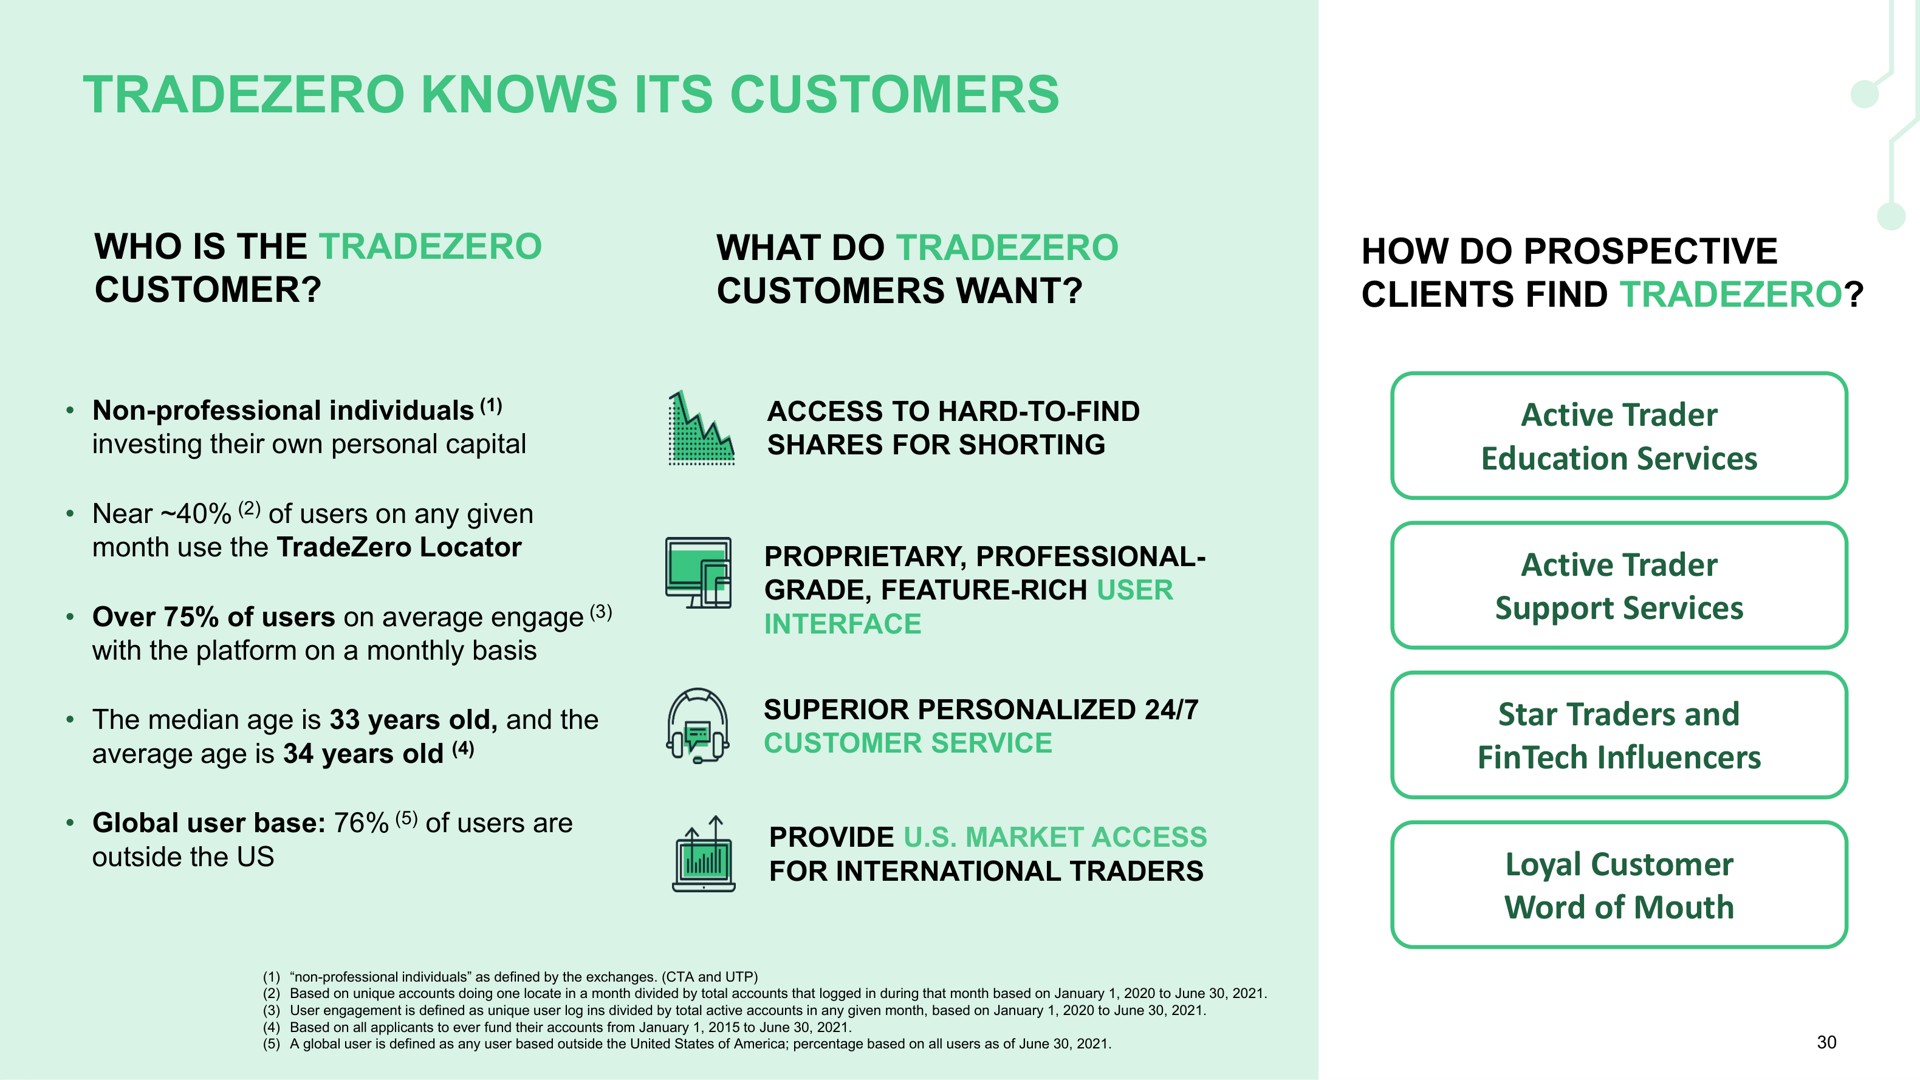 knows its customers | TradeZero